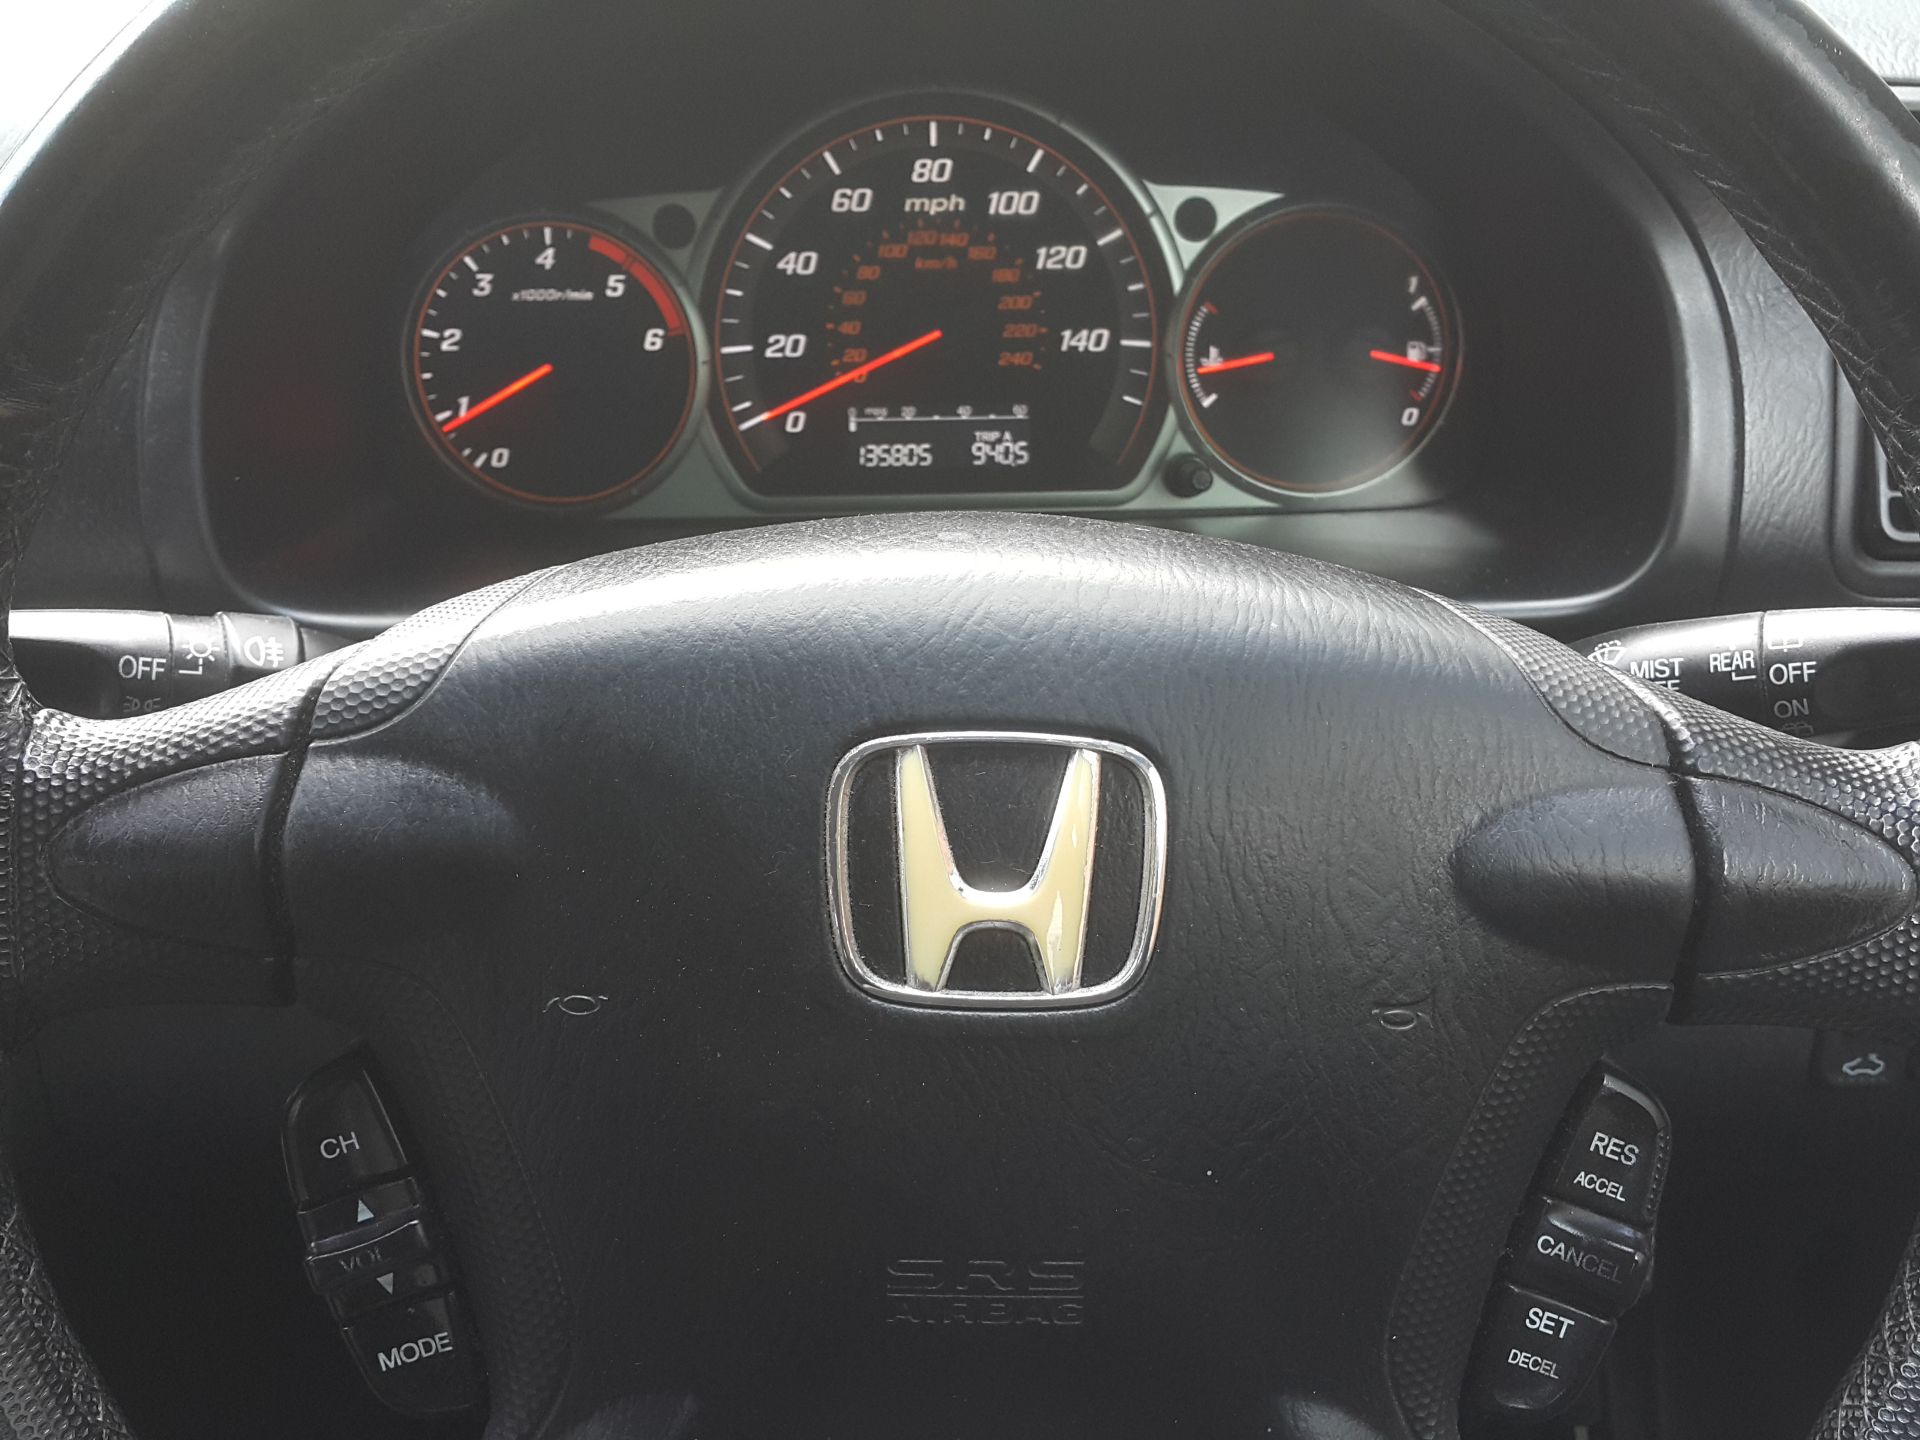 Honda CRV 2.2i CDTI Executive - 4x4, Manual, Diesel, 135000 Miles, MOT'd Until Sep 2018 - Image 14 of 20